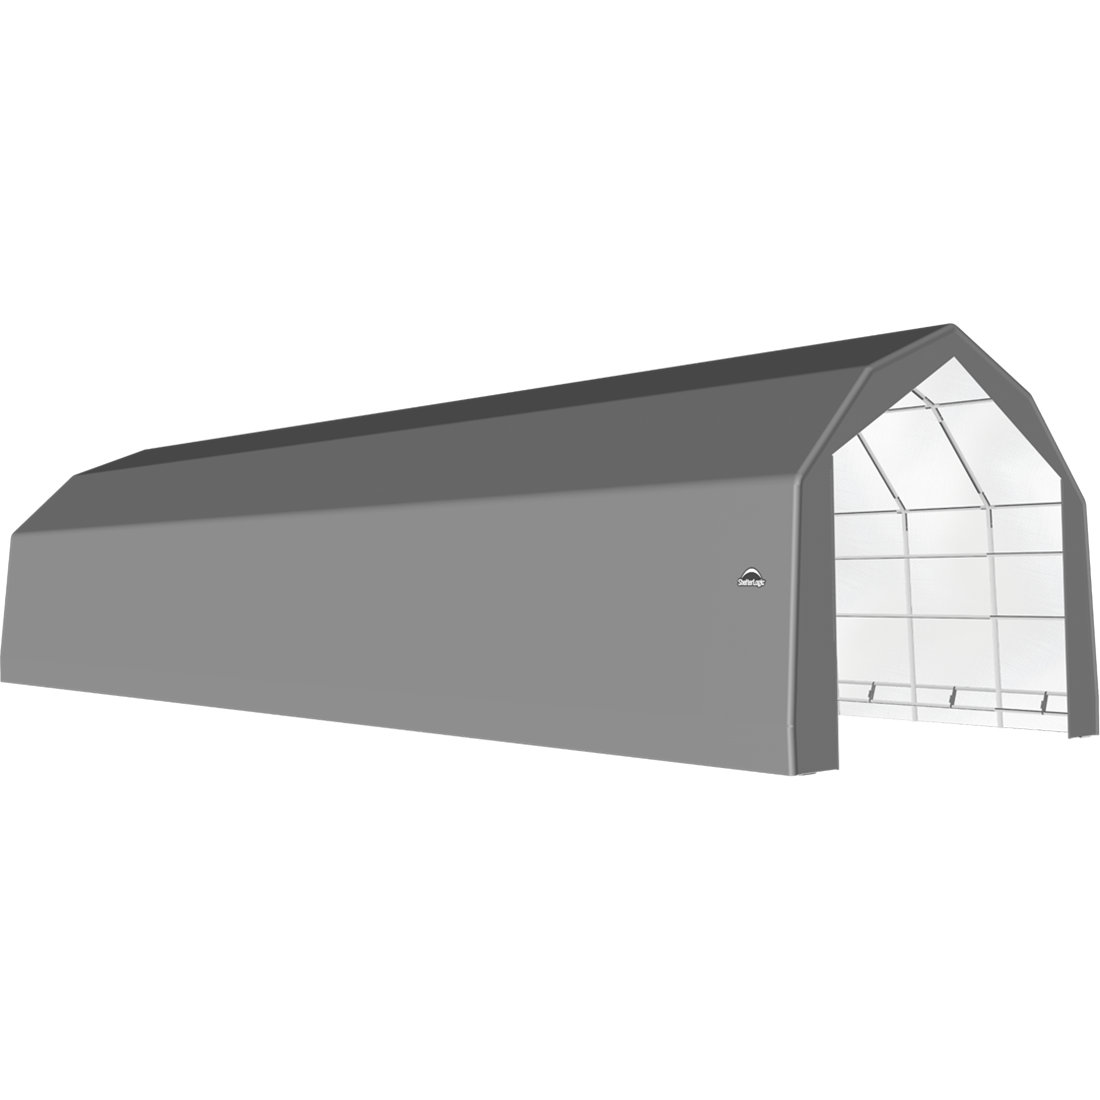 ShelterTech SP Series Barn Shelter, 20 ft. x 52 ft. x 15 ft. Heavy Duty PVC 14.5 oz. Gray